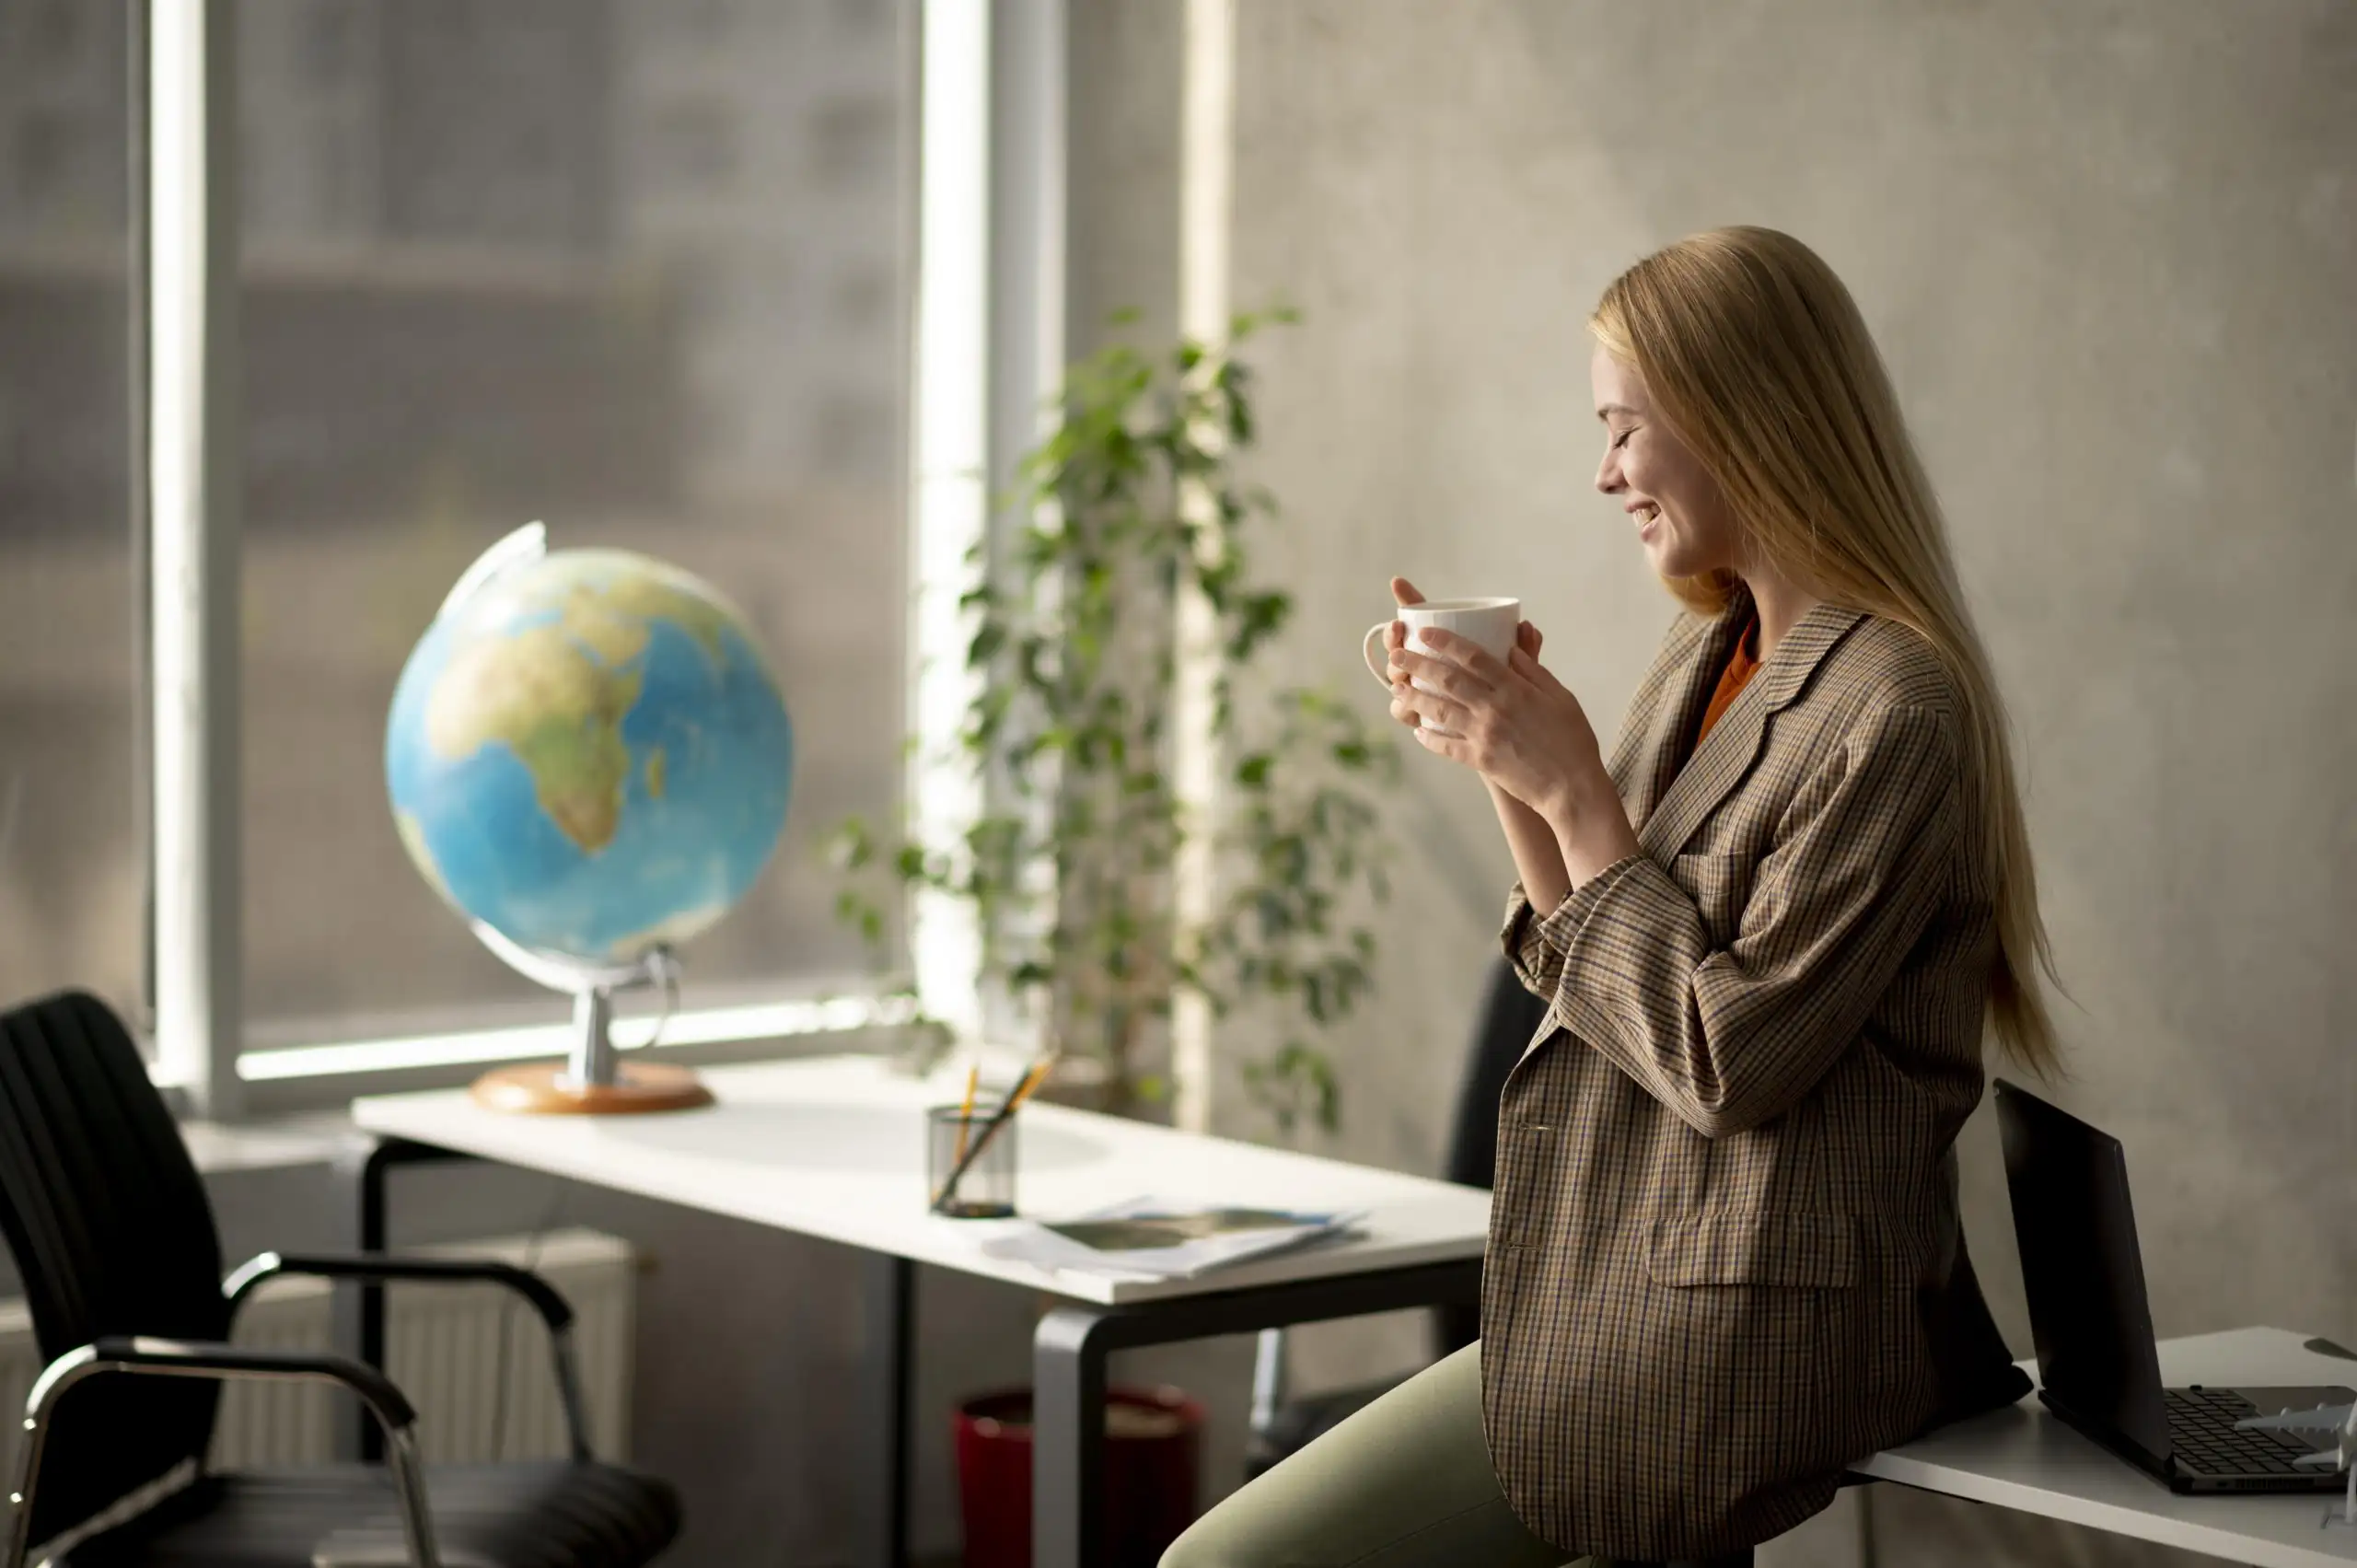 A woman sitting in a classroom near a globe drinking coffee